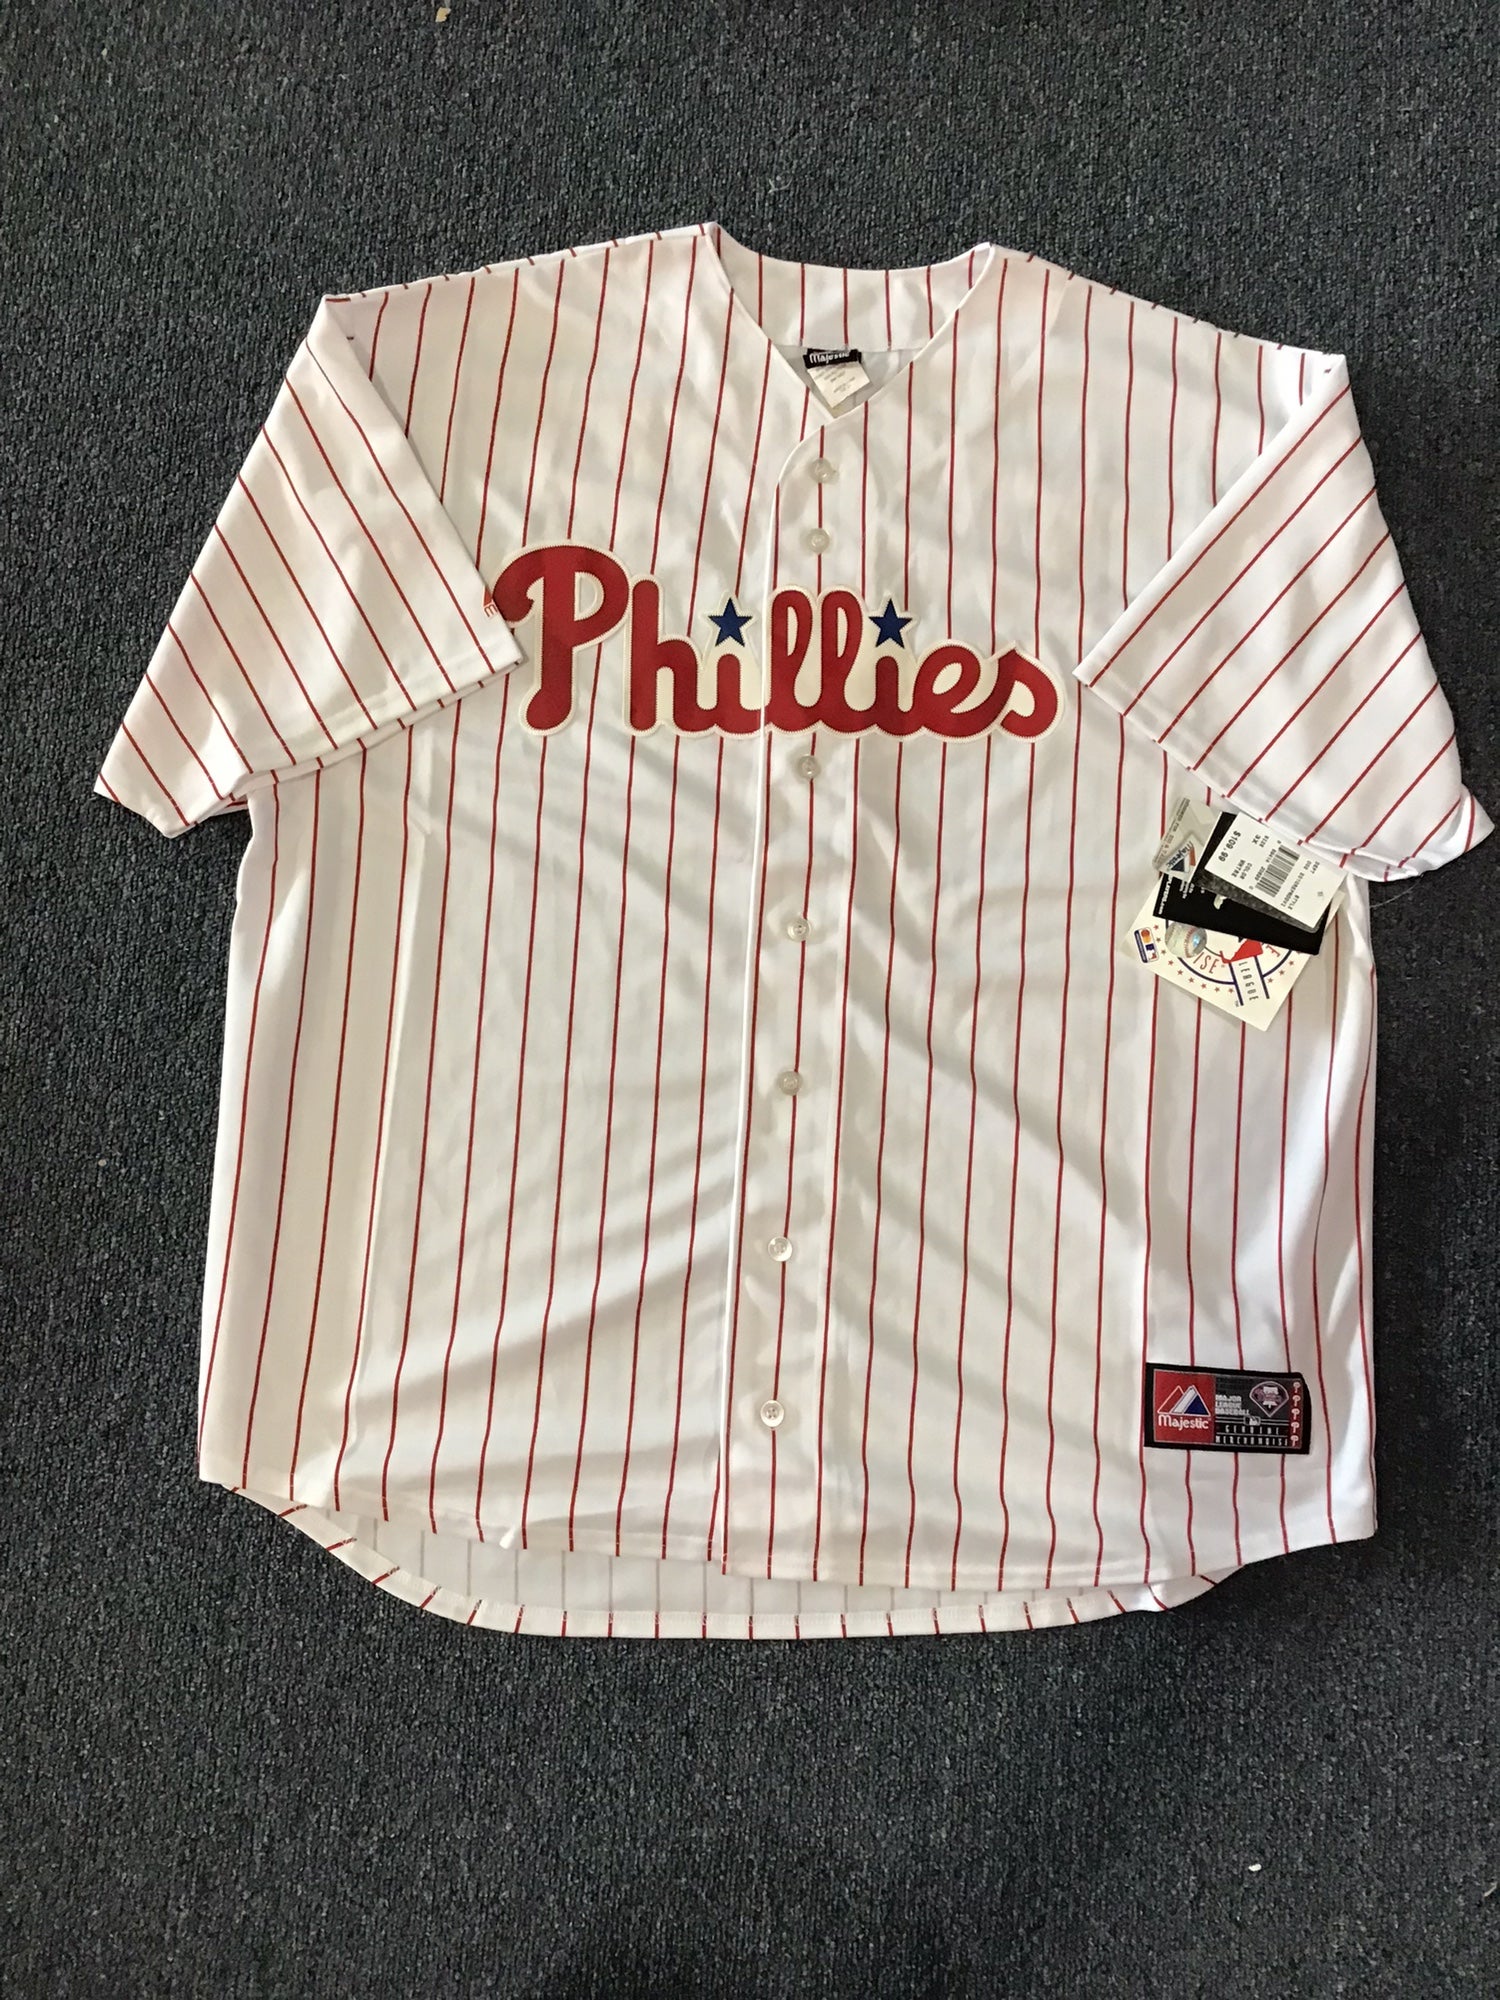 Youth Majestic MLB Philadelphia Phillies Shane Victorino Pinstripe Jersey  Size S